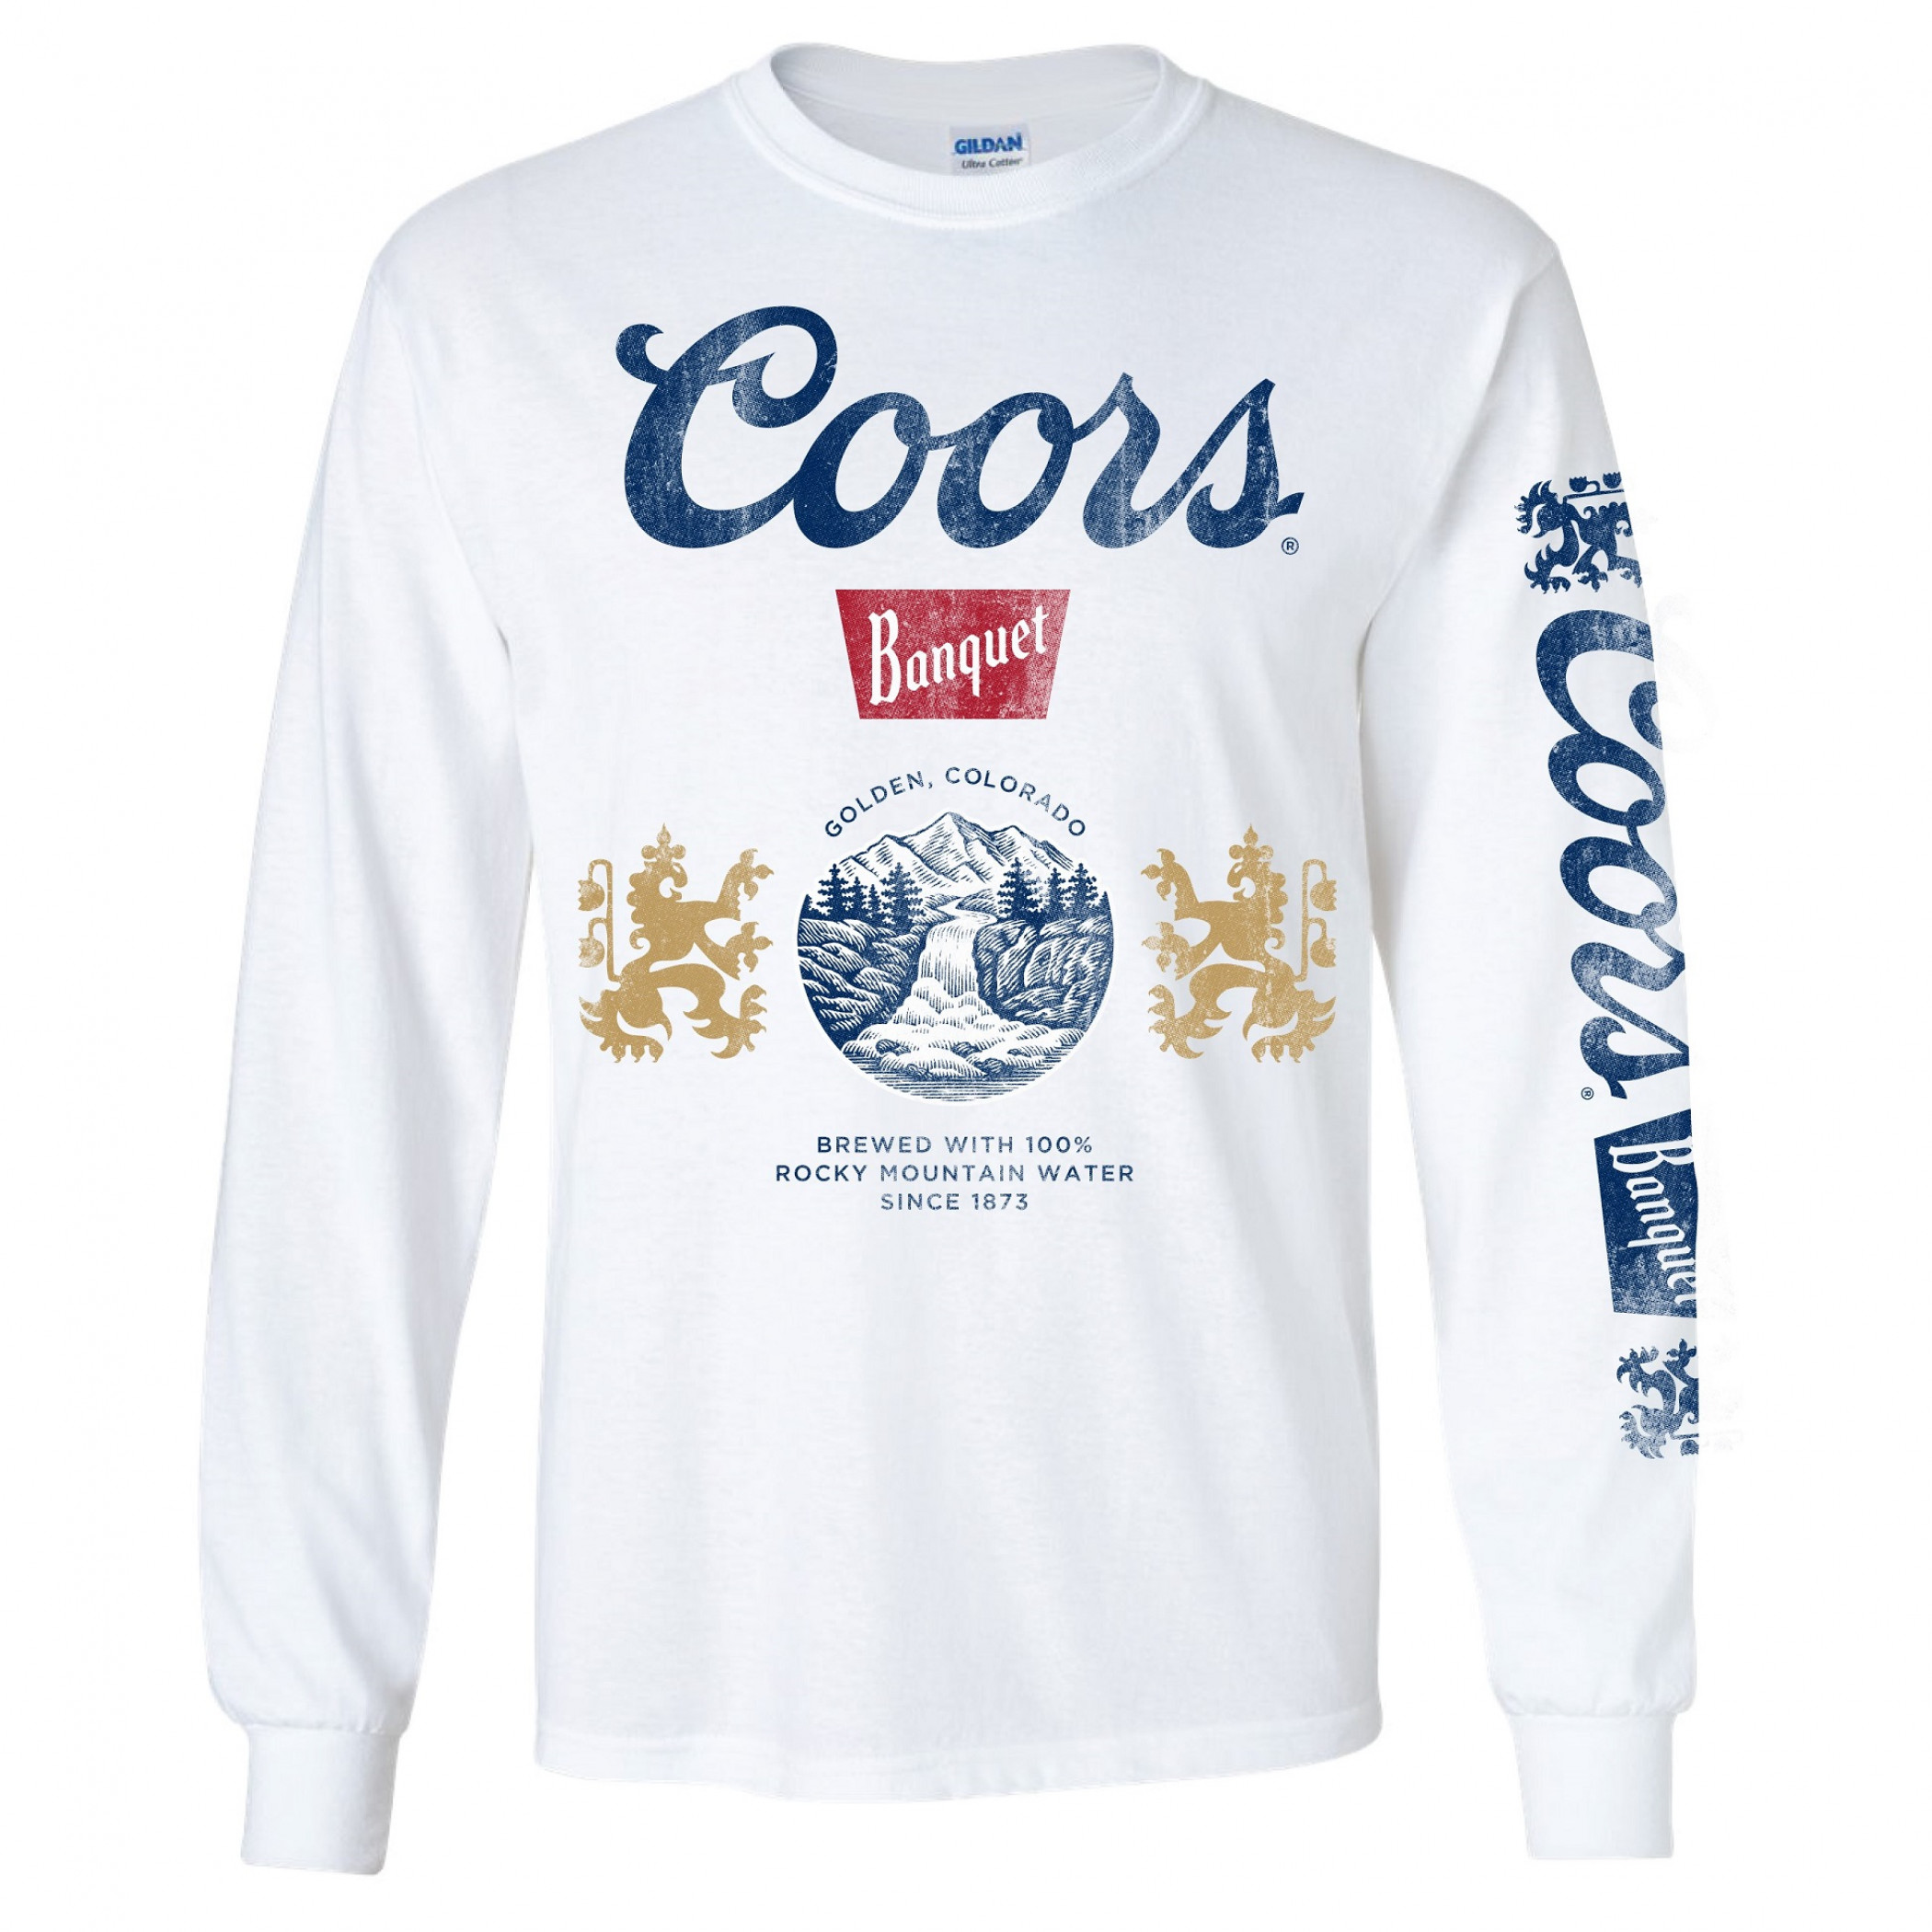 Coors Banquet Beer Sleeve Print Waterfall Crest Long Sleeve Shirt